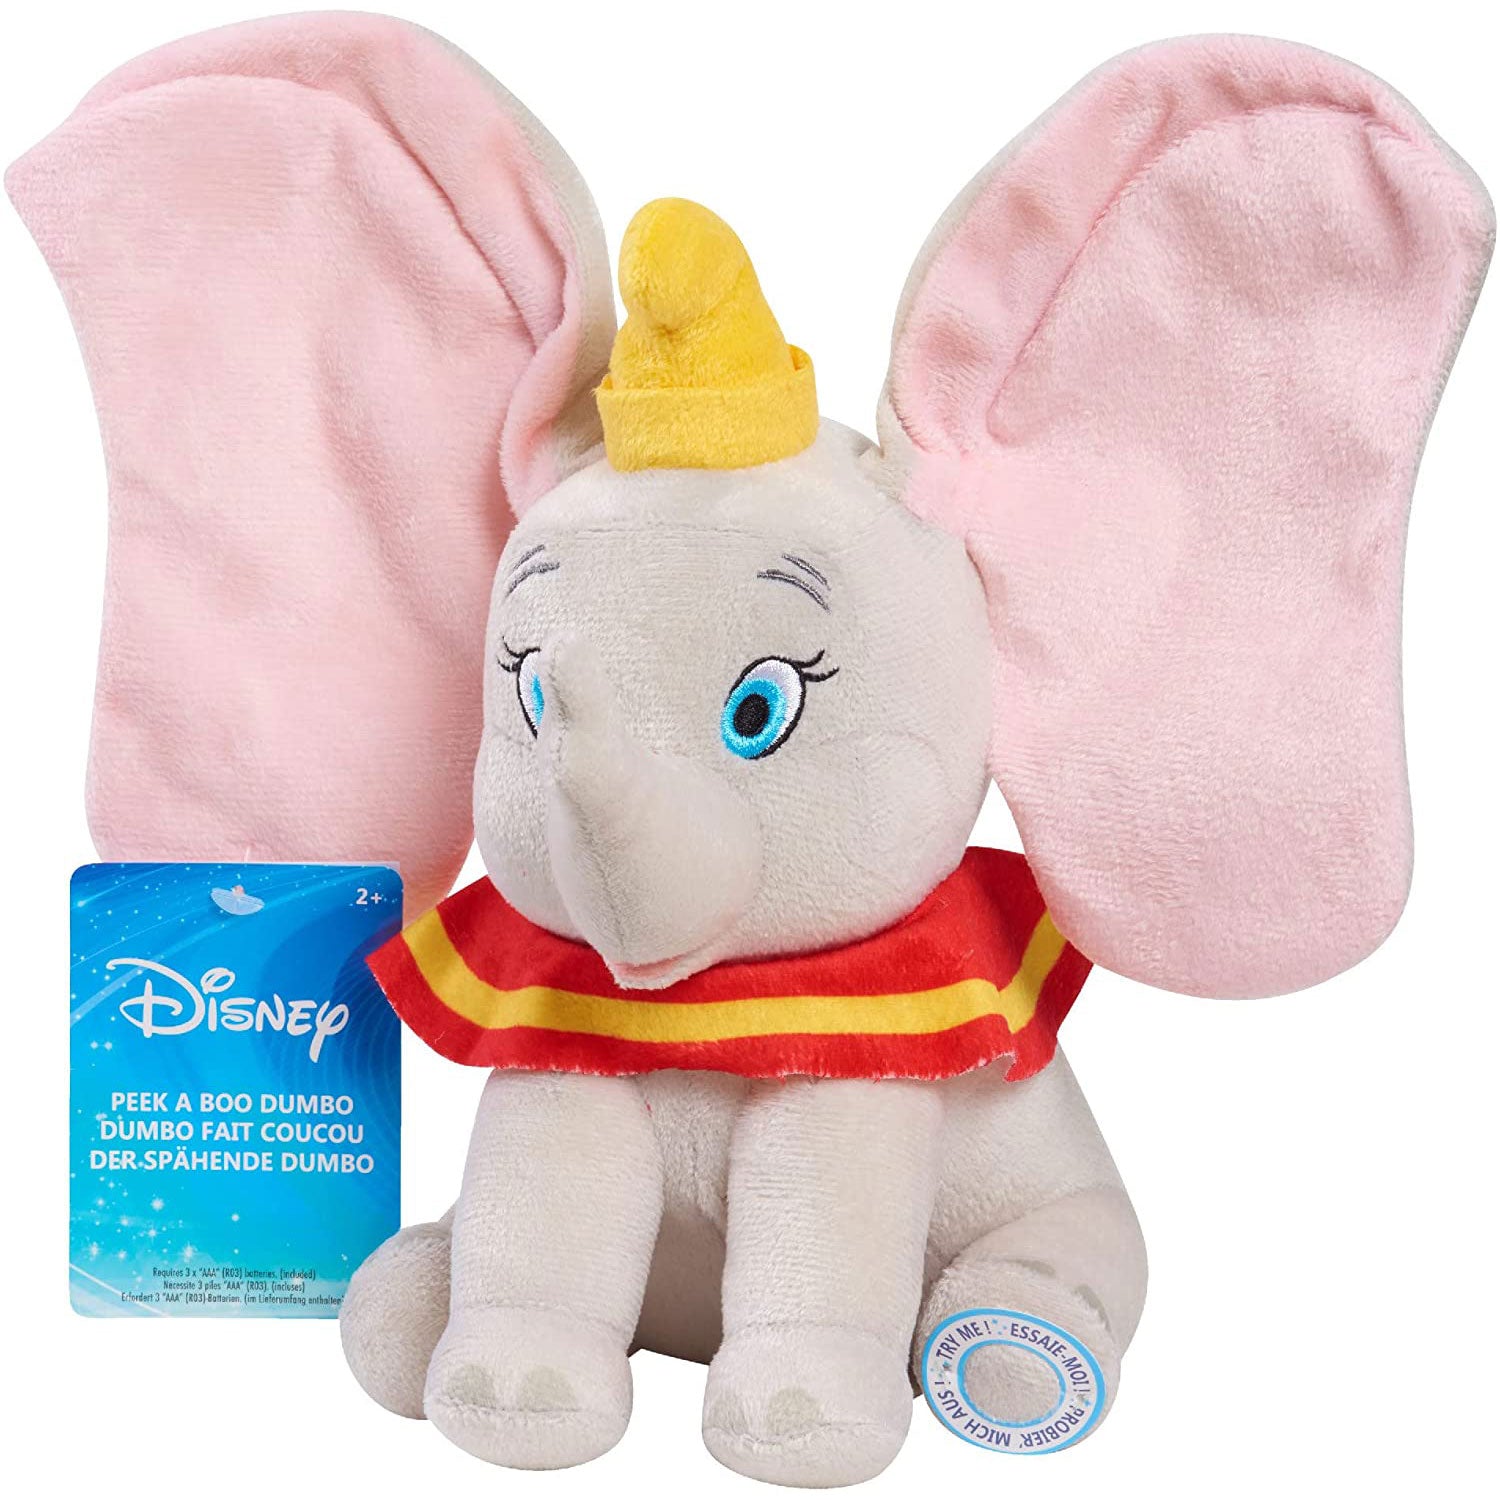 Disney Peek-A-Boo Dumbo Plush